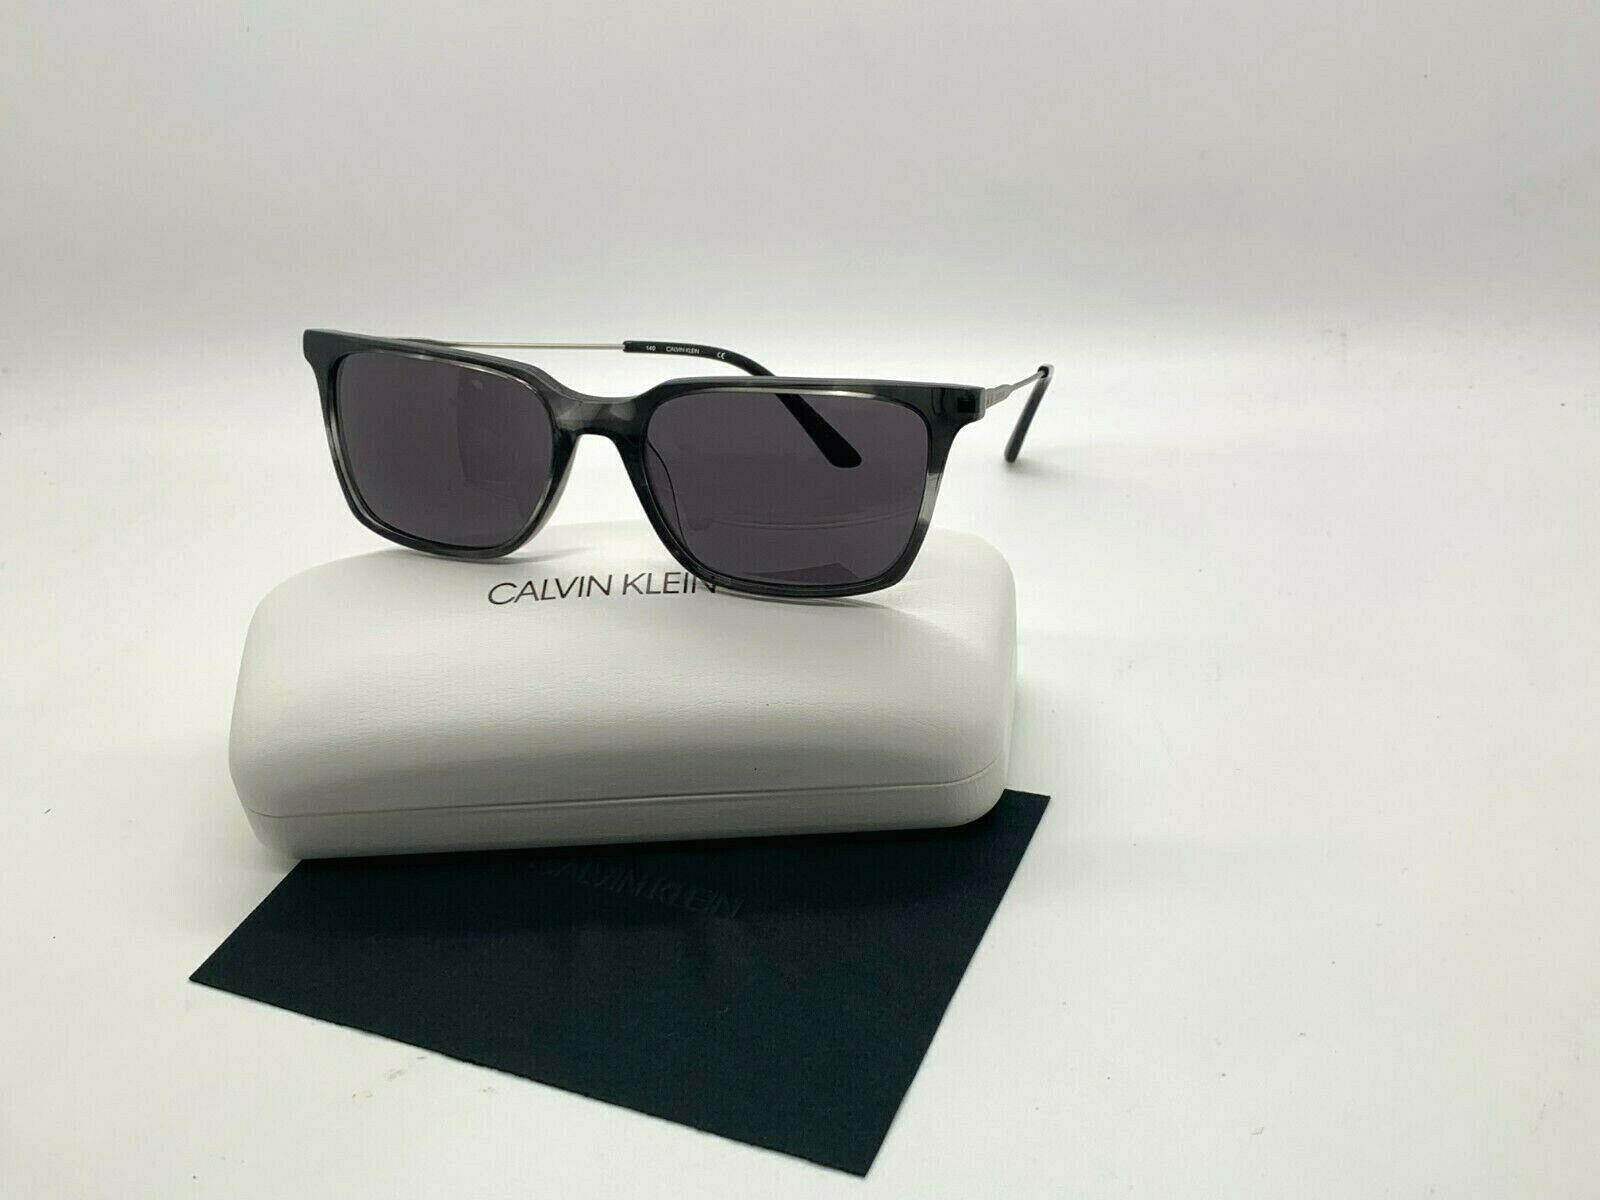 NEW Calvin Klein Sunglasses CK 19703S 025 STRIPED BLACK 56-17-140MM /CASE